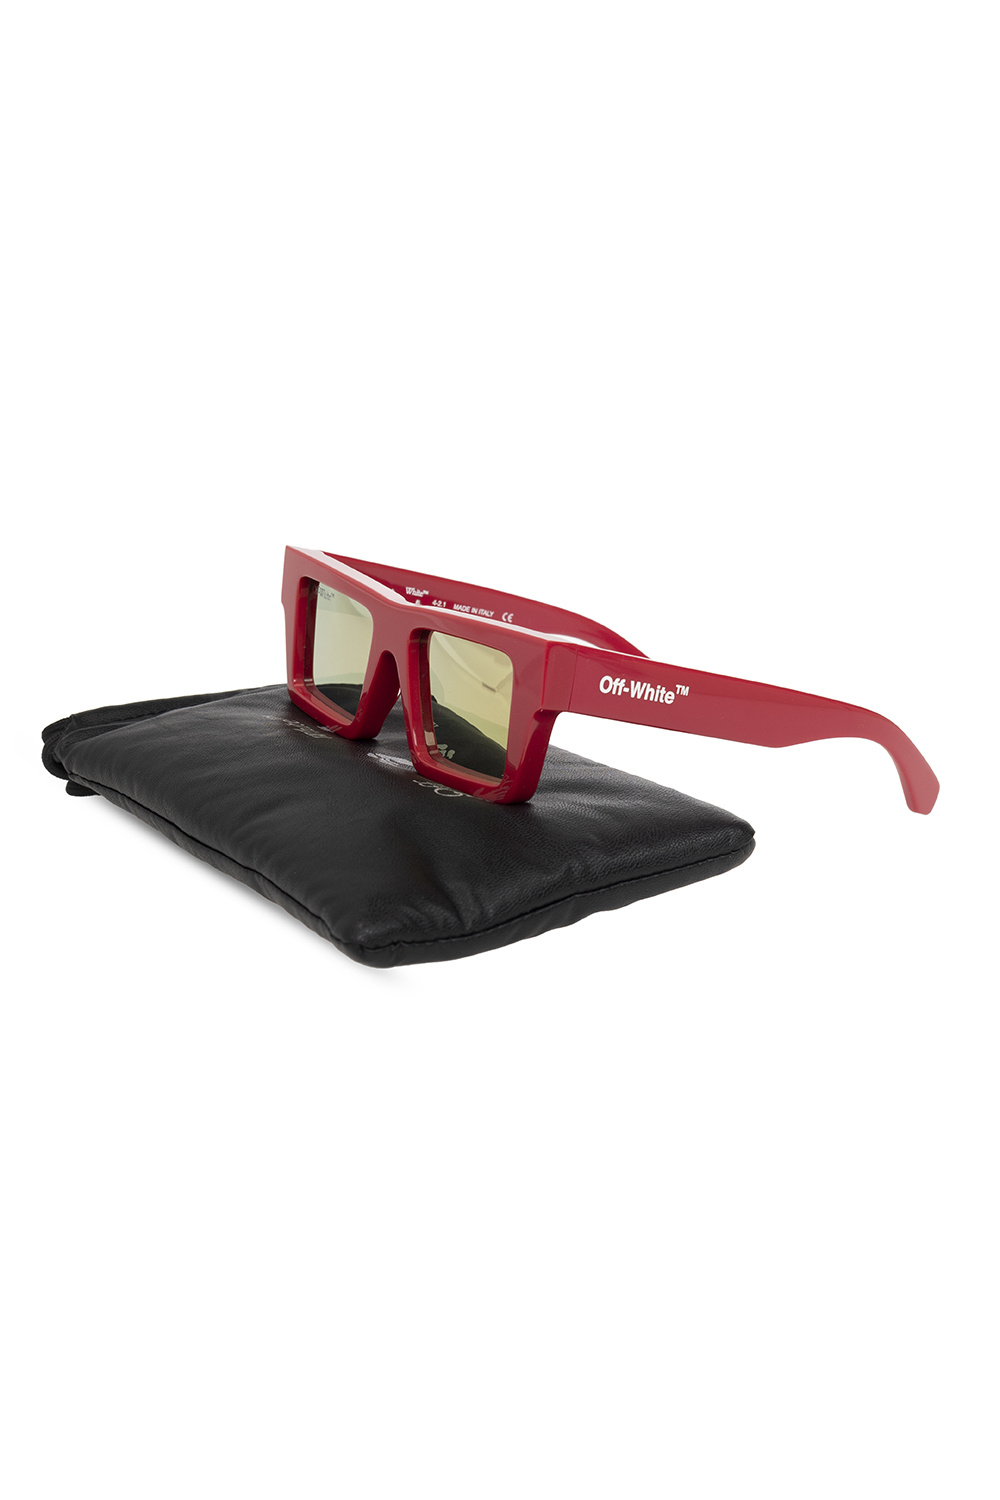 Off-White - Nassau Sunglasses - Transparent - Luxury - Off-White Eyewear -  Avvenice